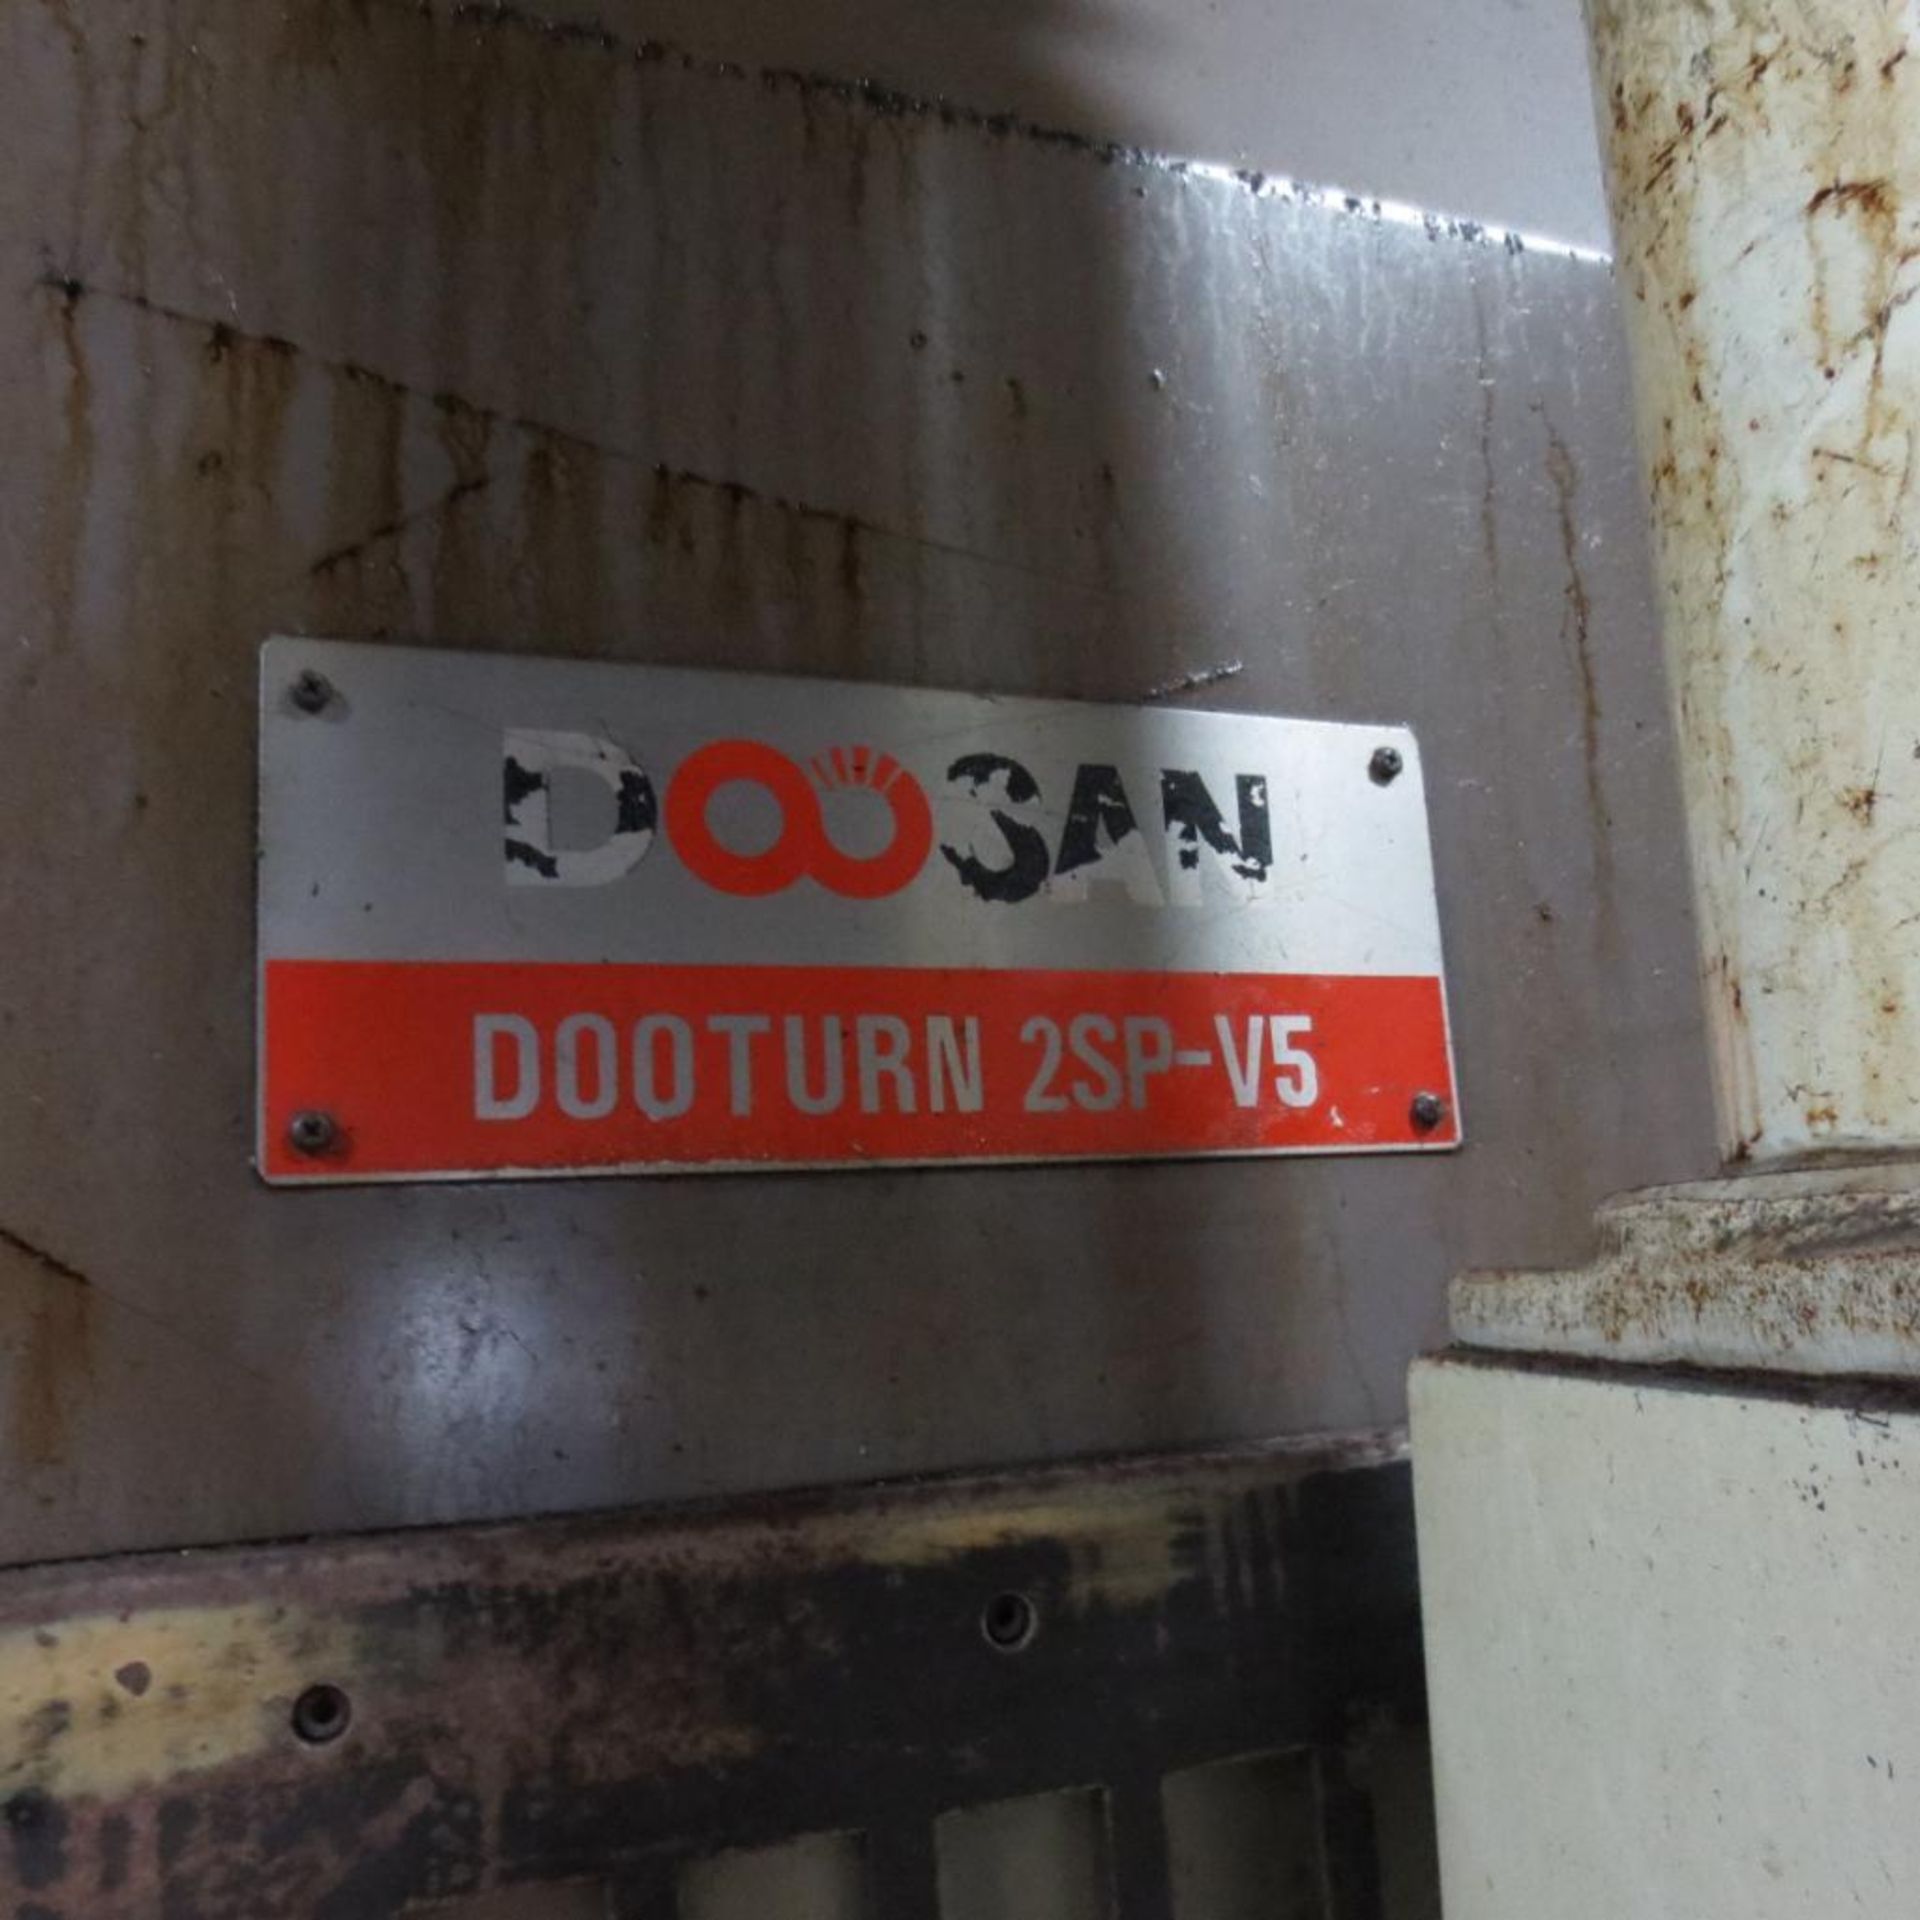 Doosan Model Dooturn-25P-V5 Vertical CNC Turning Center, S/N LTD0015. Loading Fee is $950.00 - Image 2 of 8